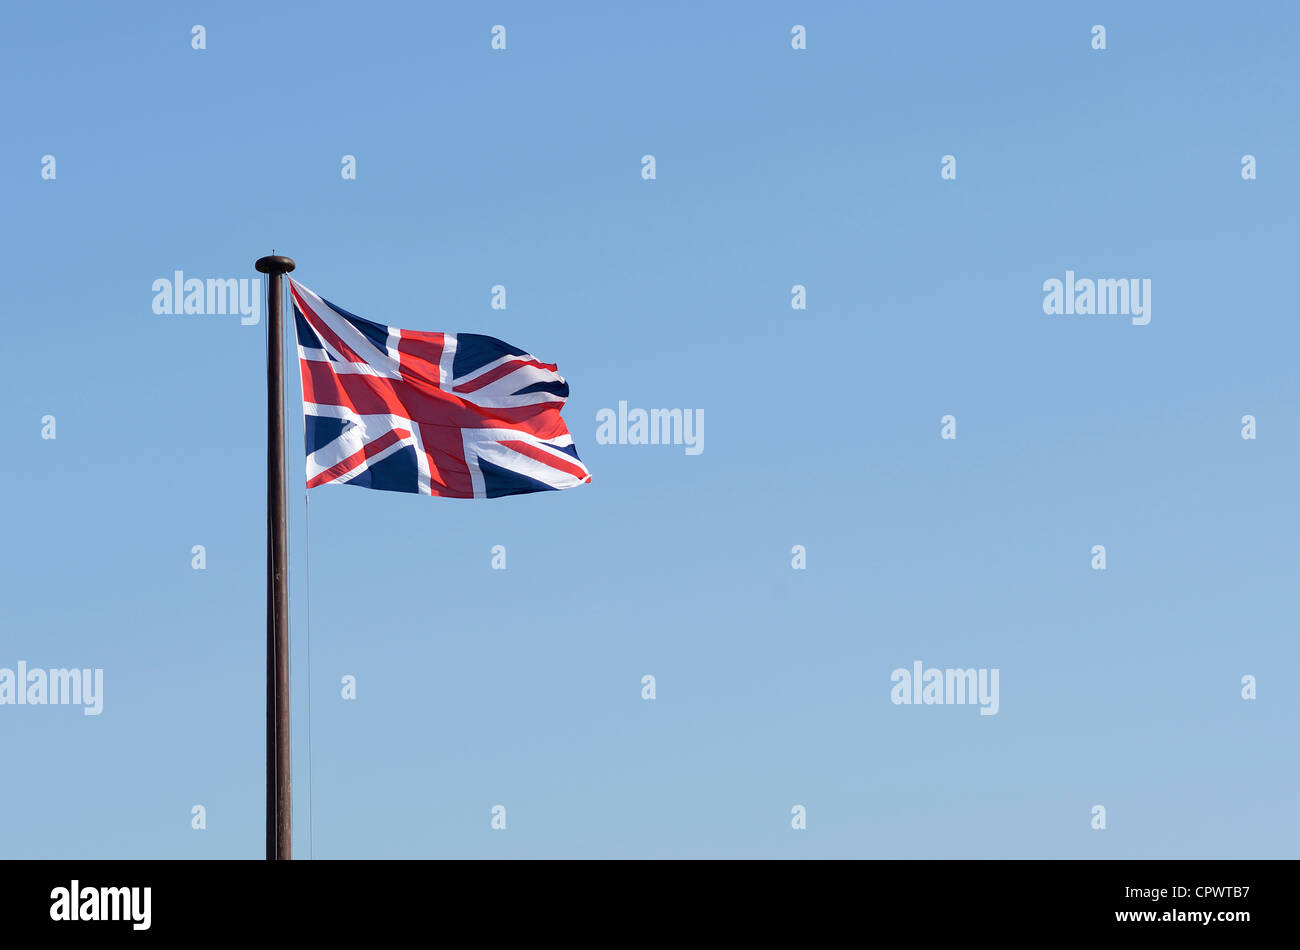 Union Jack flag flying against a blue sky Banque D'Images